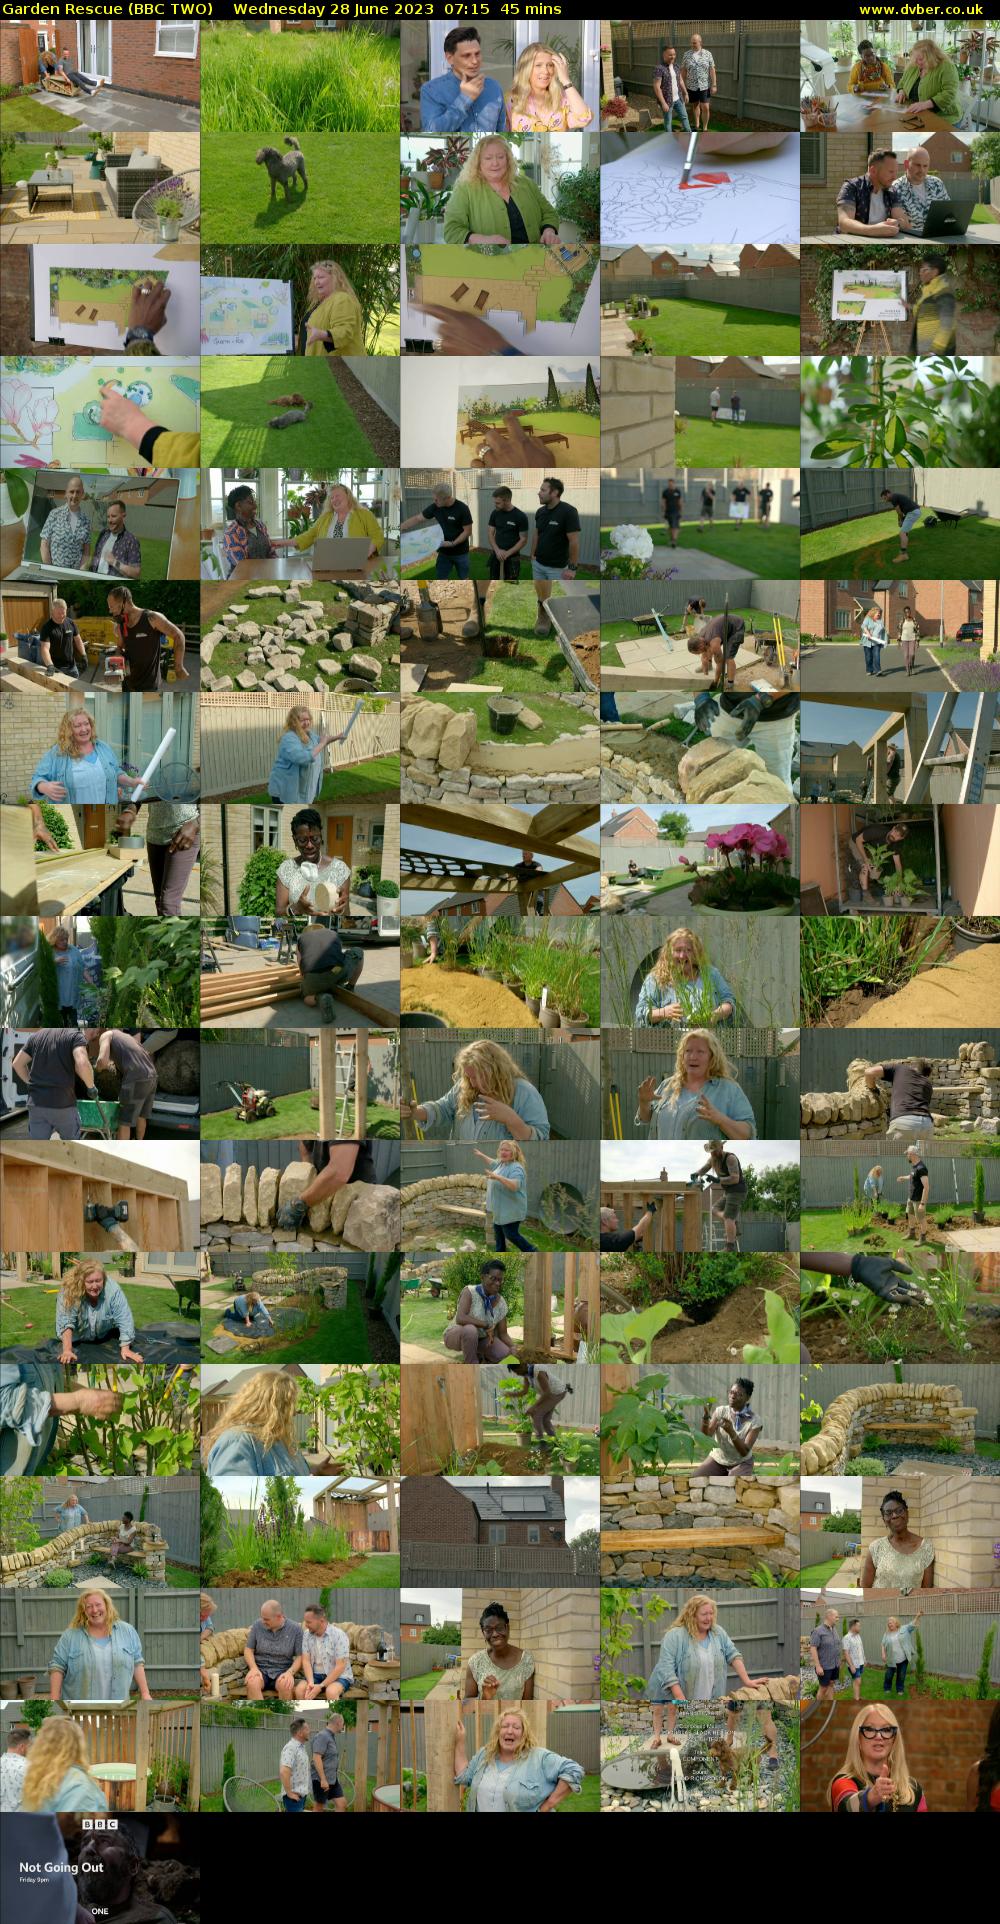 Garden Rescue (BBC TWO) Wednesday 28 June 2023 07:15 - 08:00